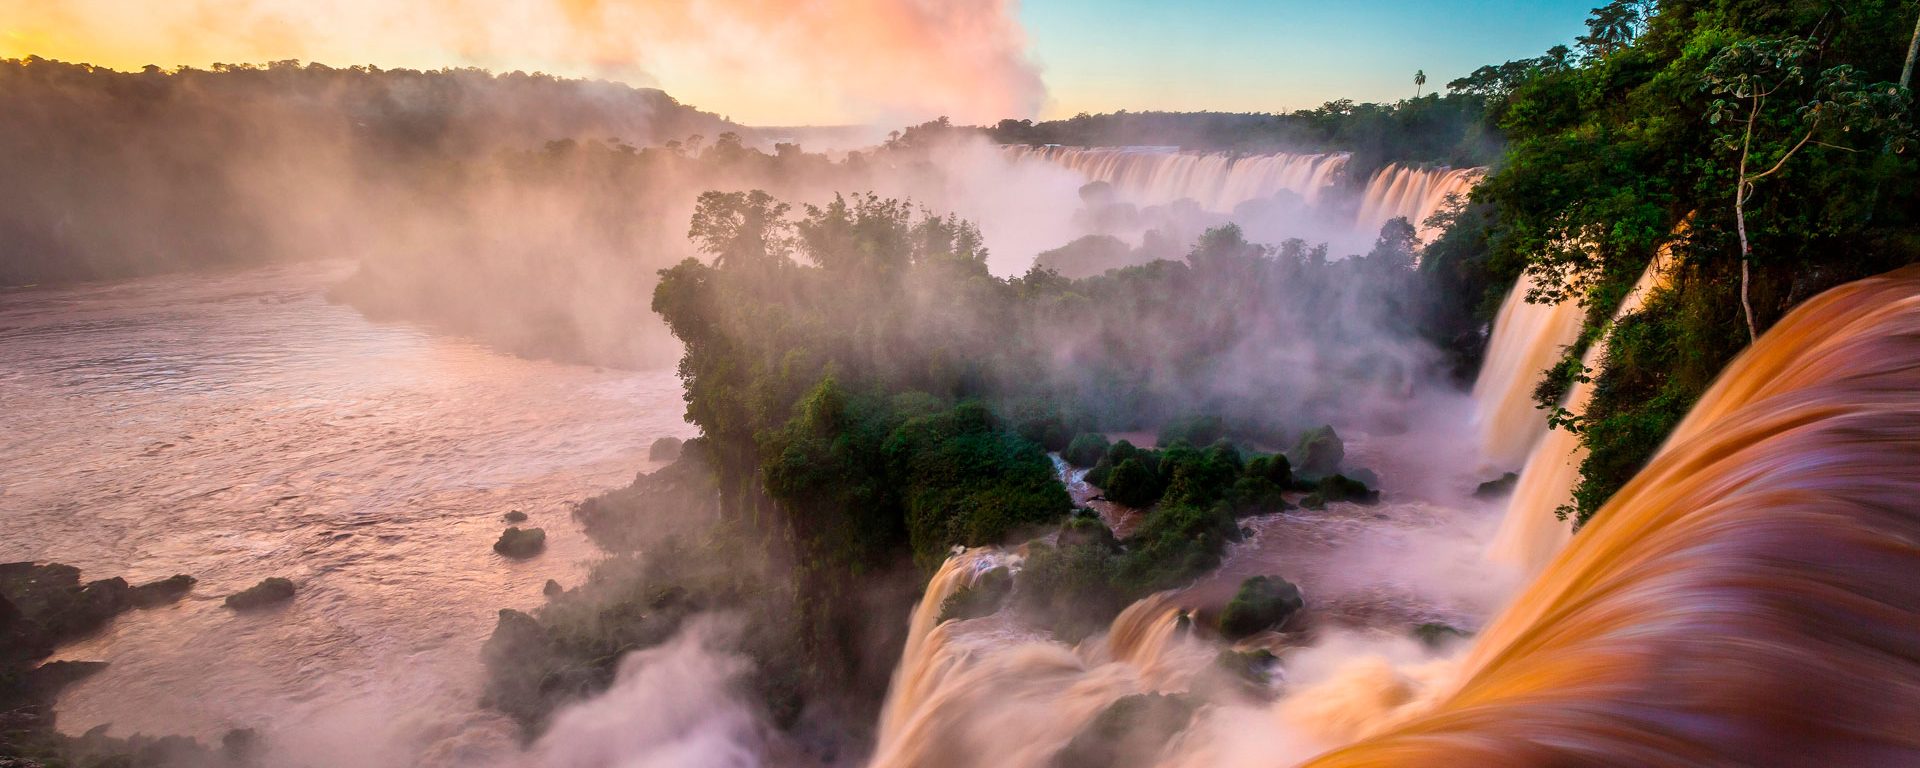 Iguazu Falls, on the border between Argentina and Brazil, at sunrise